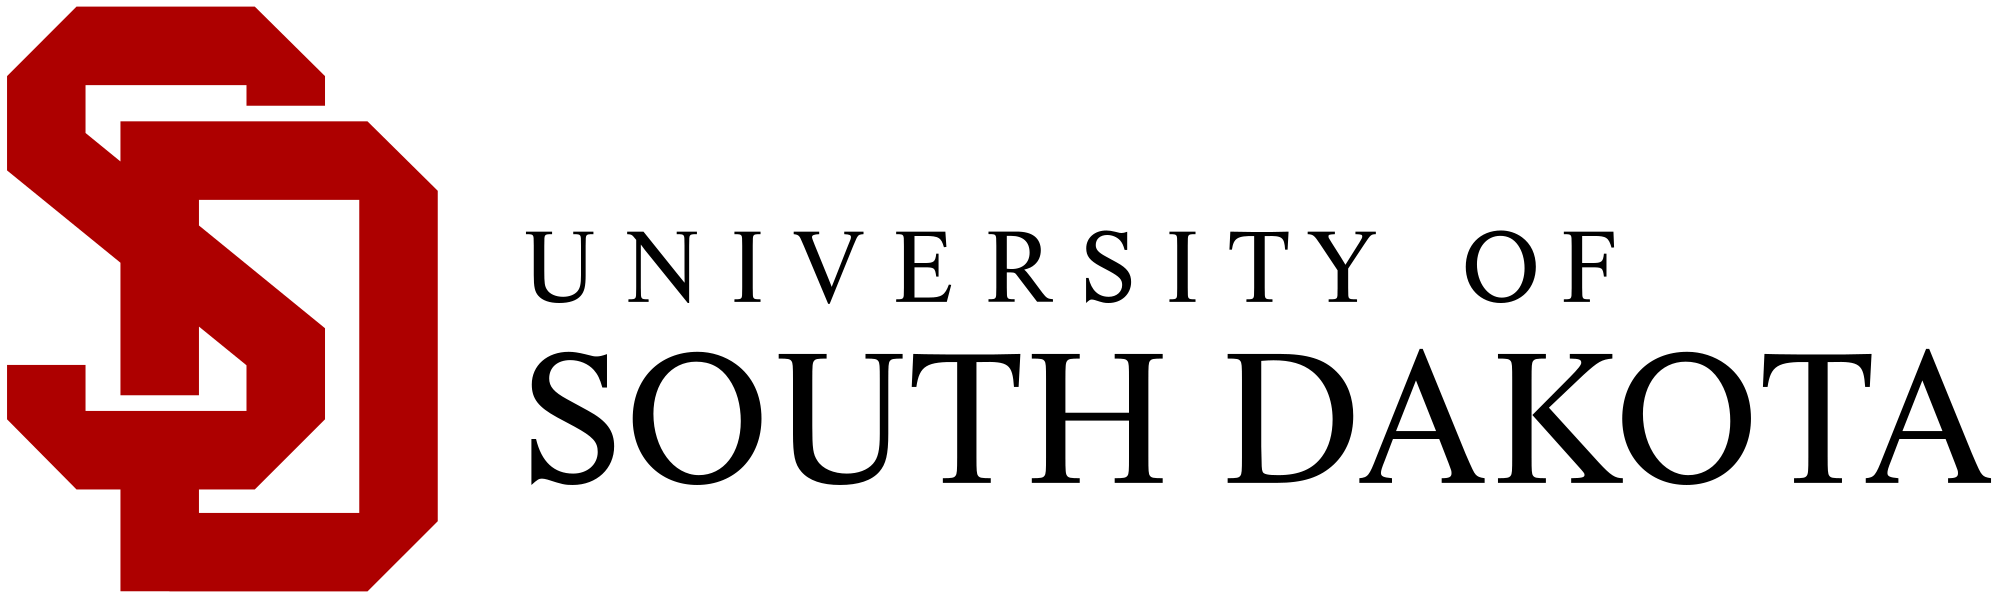 Dakota Logo - File:University of South Dakota logo.svg - Wikimedia Commons